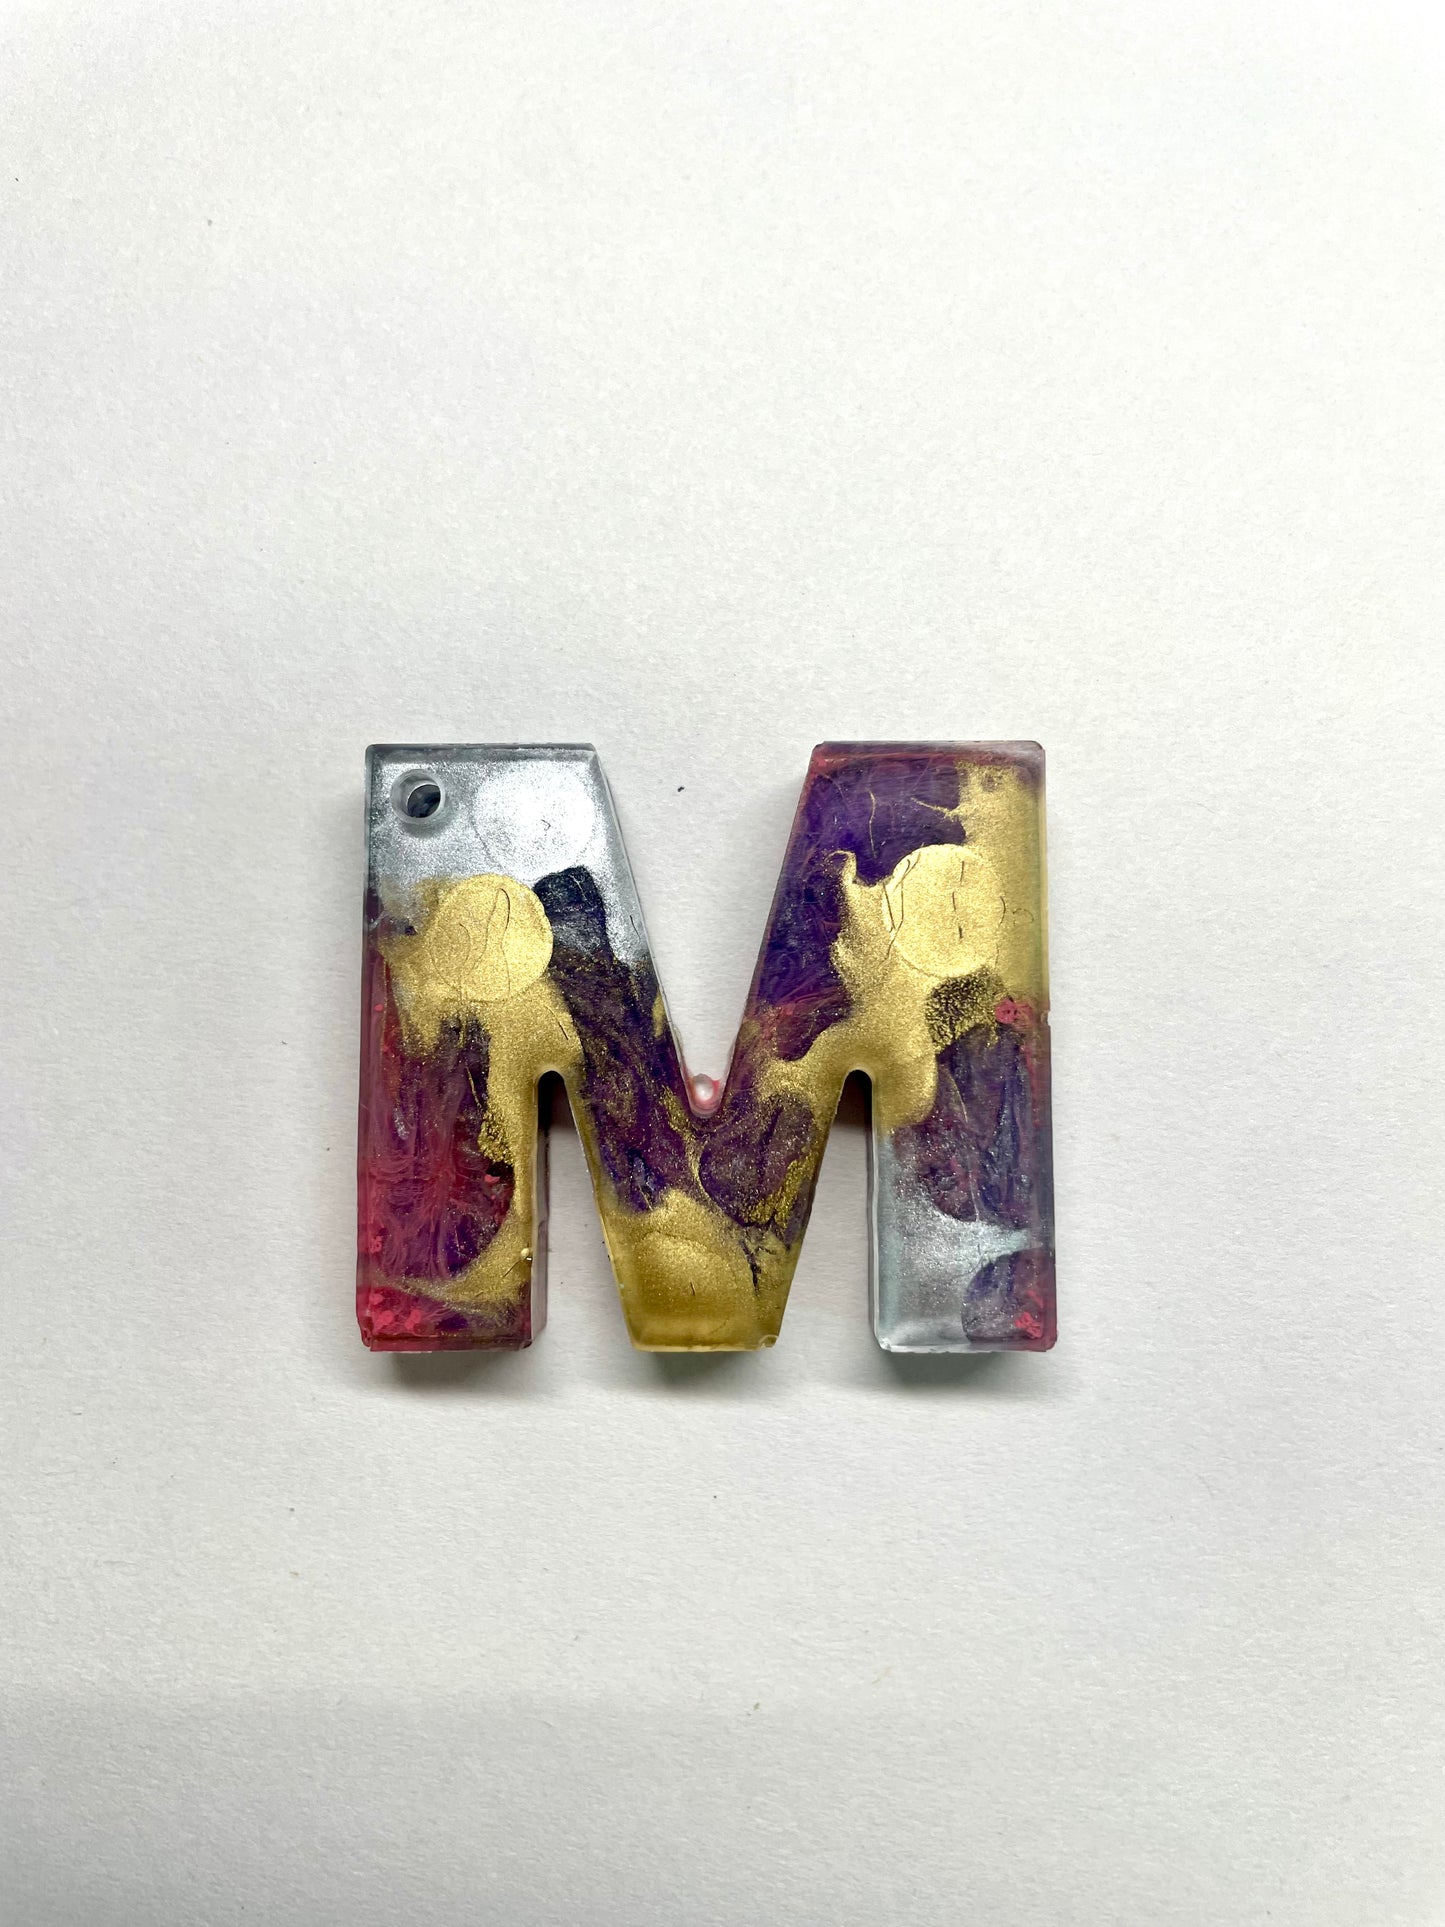 Acrylic keychains